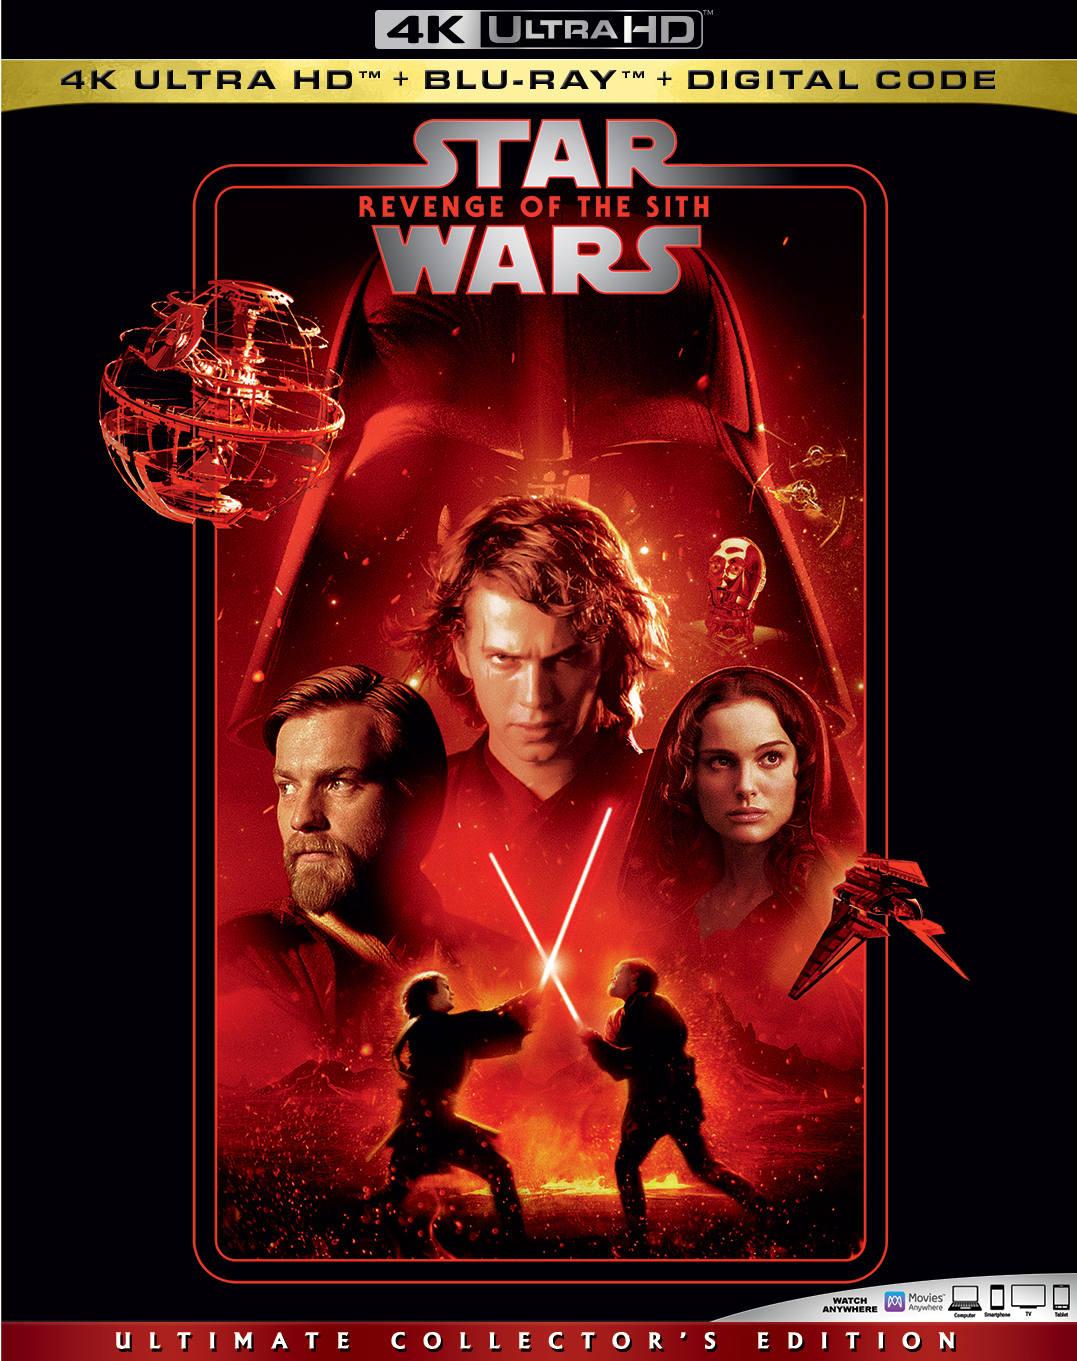 Rogue One: A Star Wars Story (4K Ultra HD + Blu-ray + Digital Code